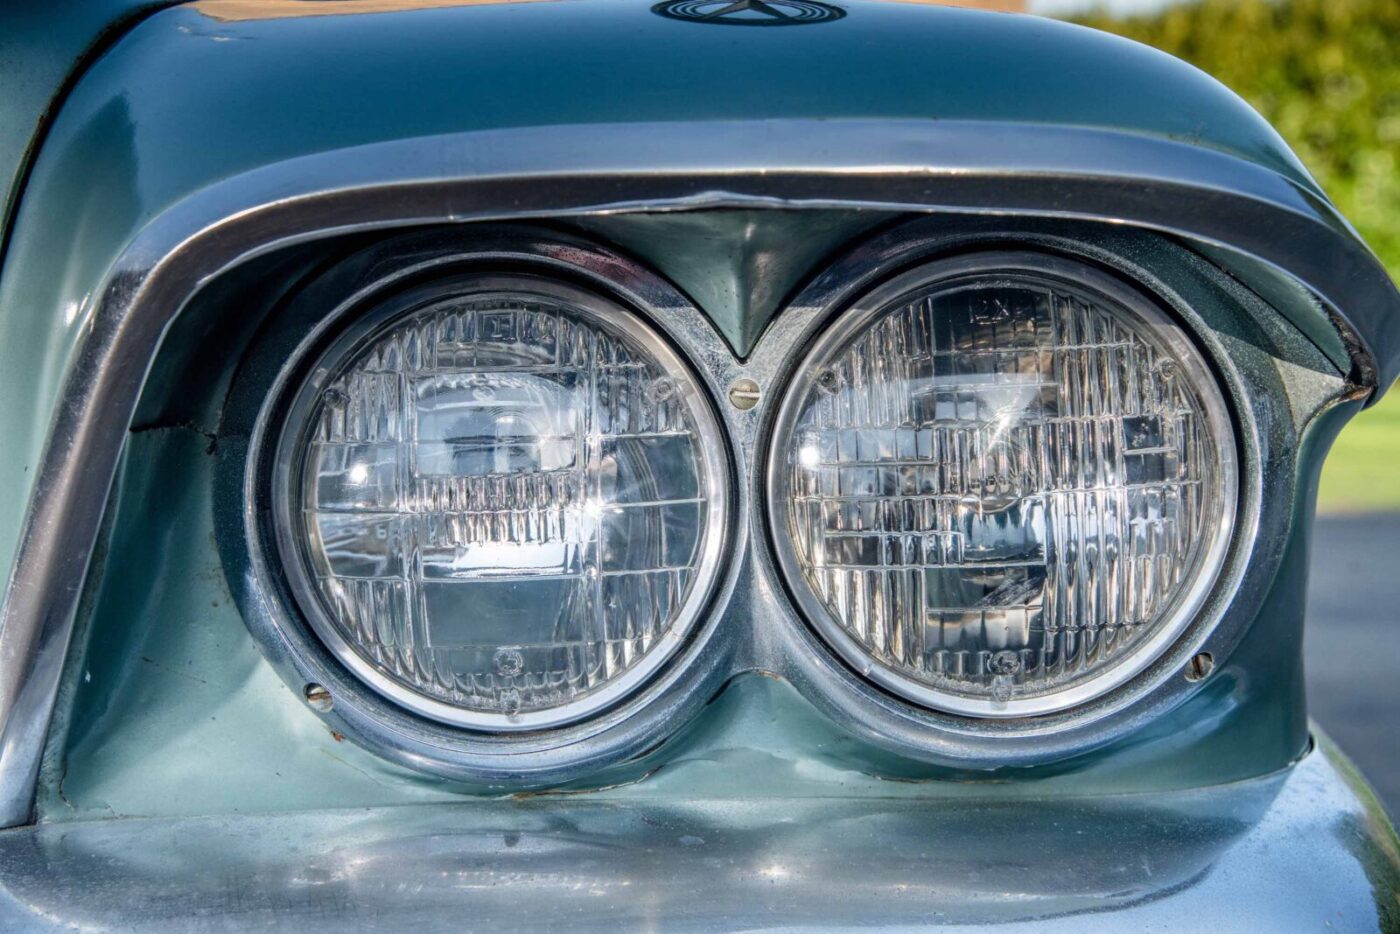 Buick Century twin headlamps